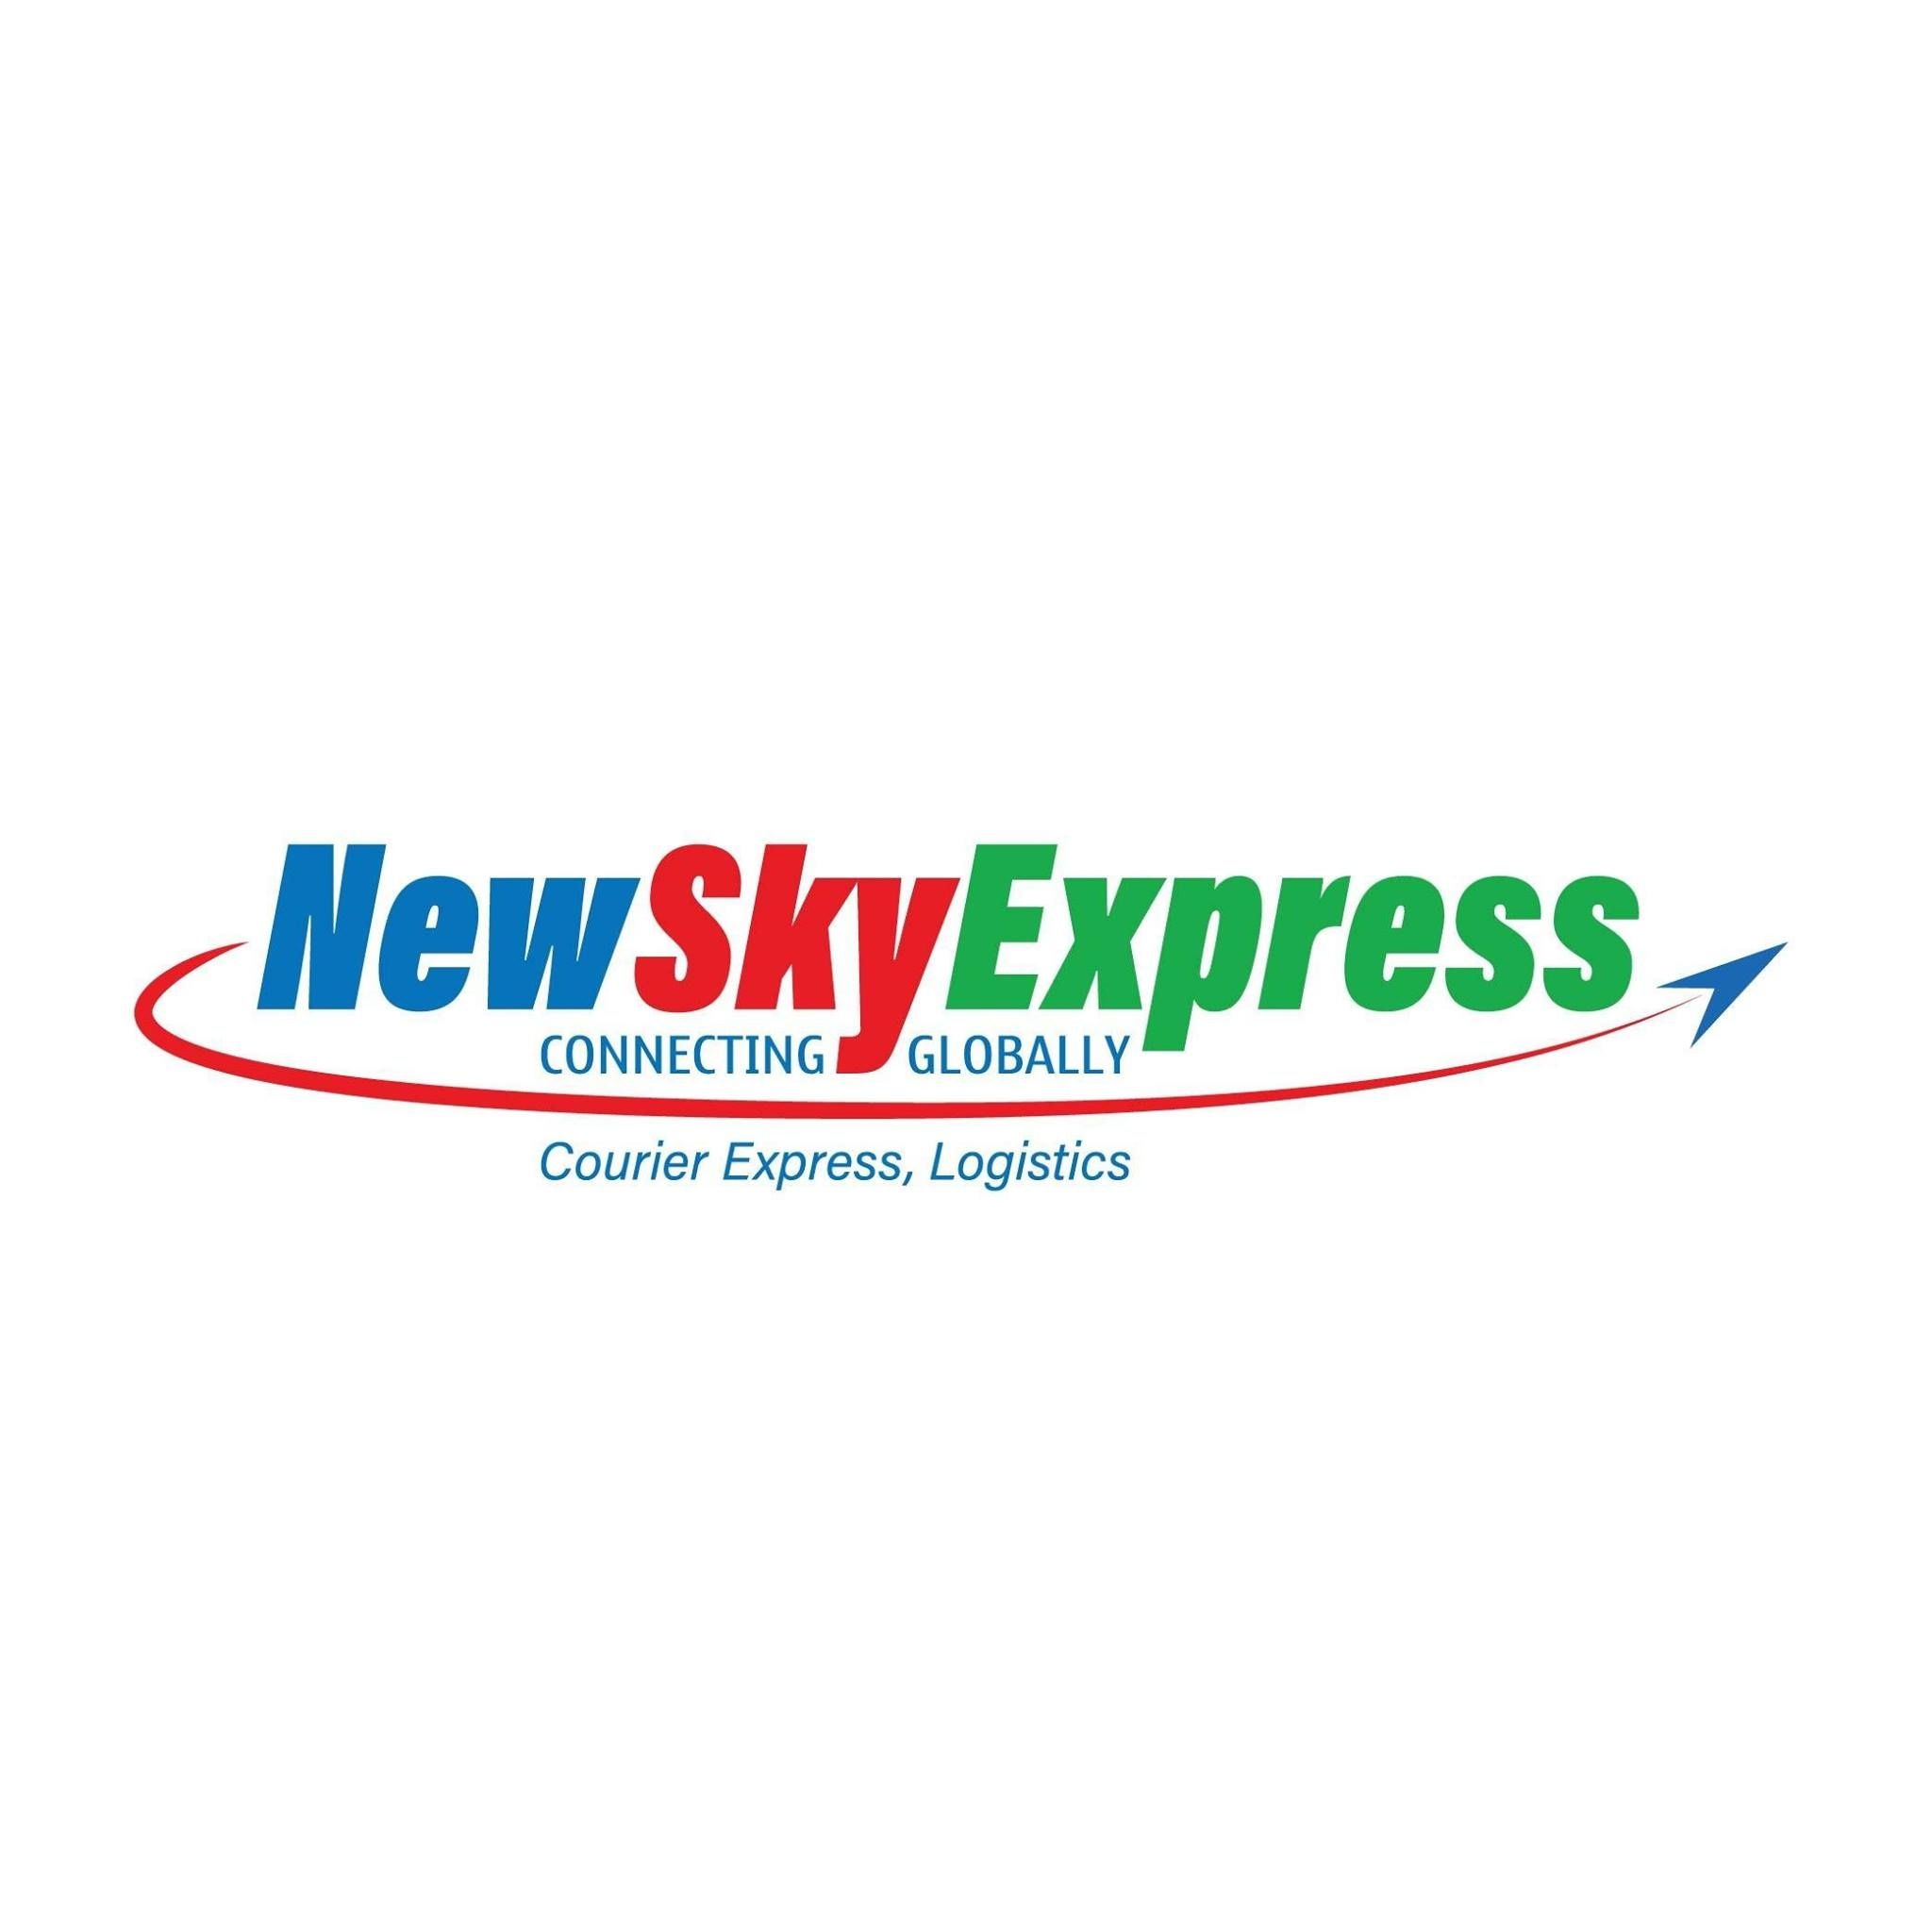 New Sky Express Trading-Export Co., Ltd providing freight services to Philippines, Malaysia, Singapores, Dubai, Taiwan